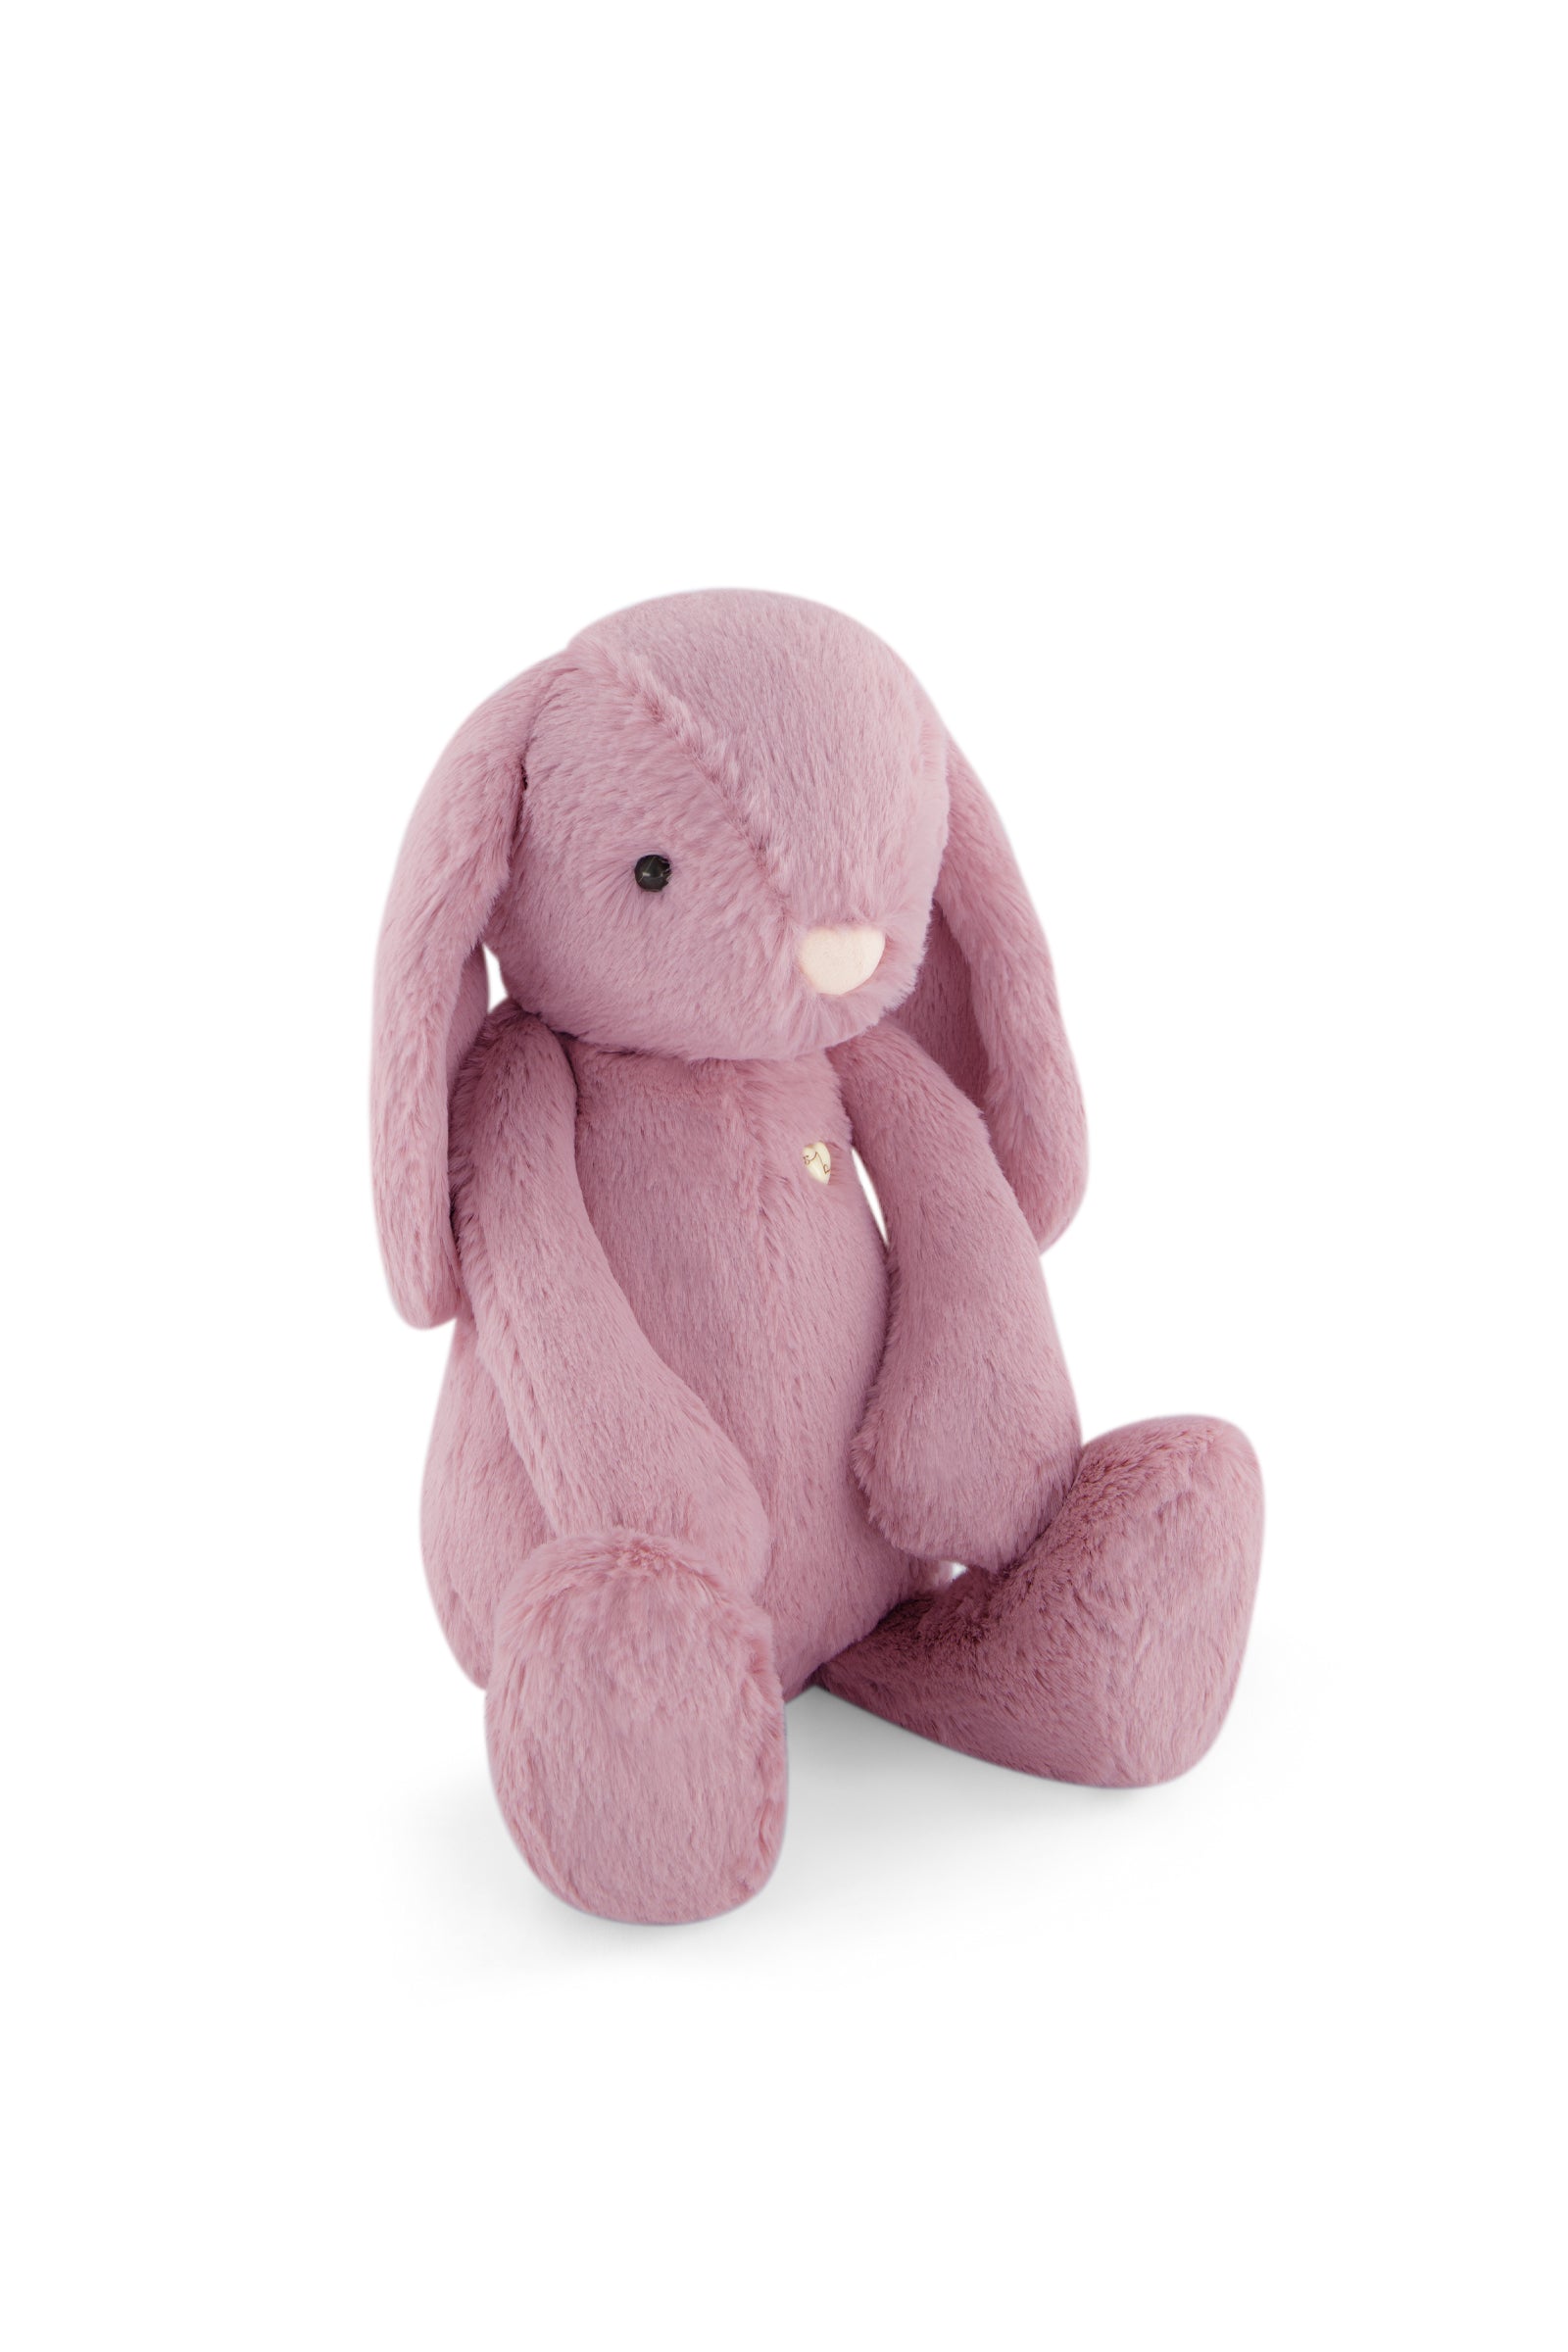 Snuggle Bunnies | Penelope the Bunny | Lilium